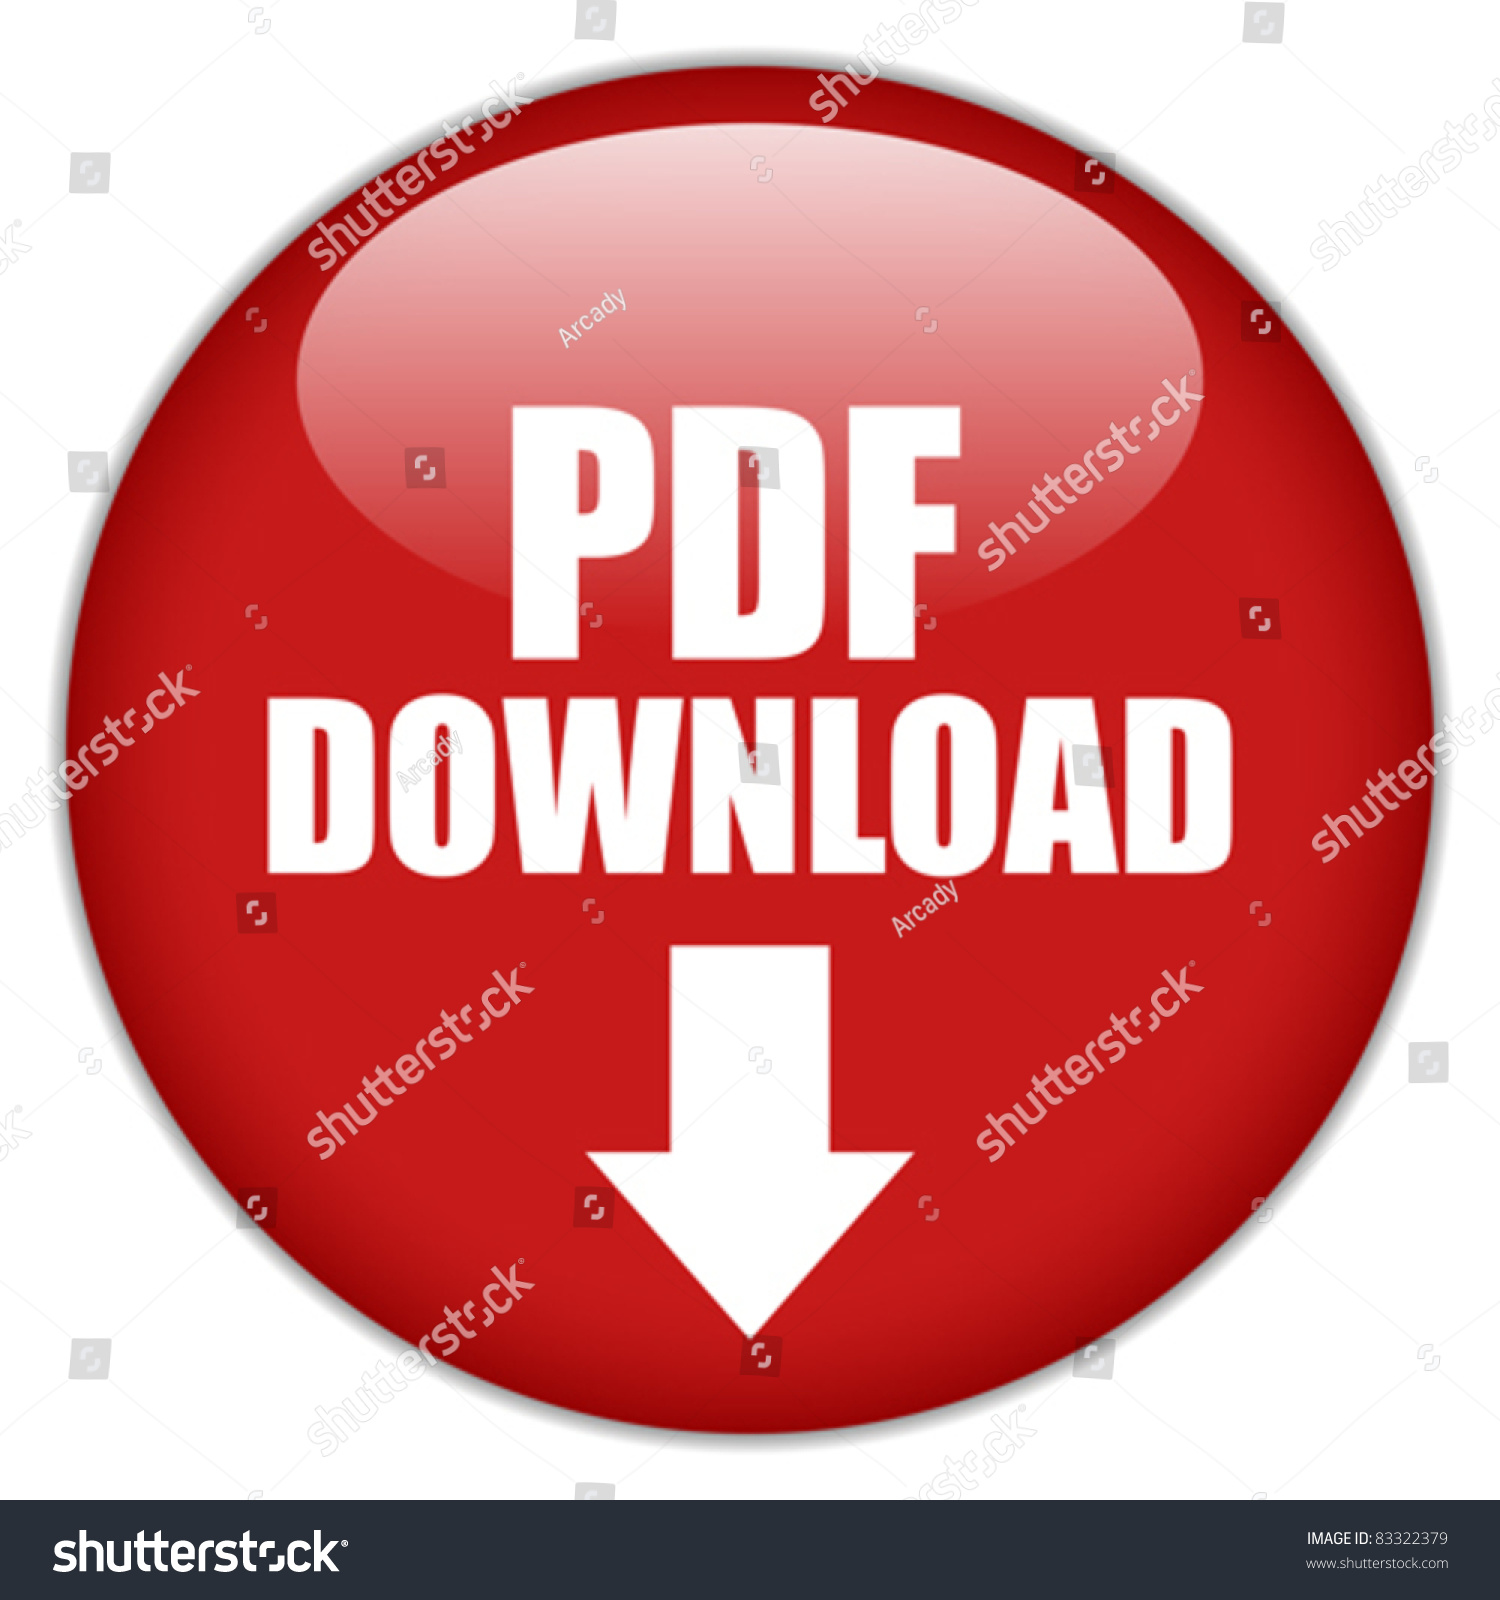 vector free download pdf - photo #8